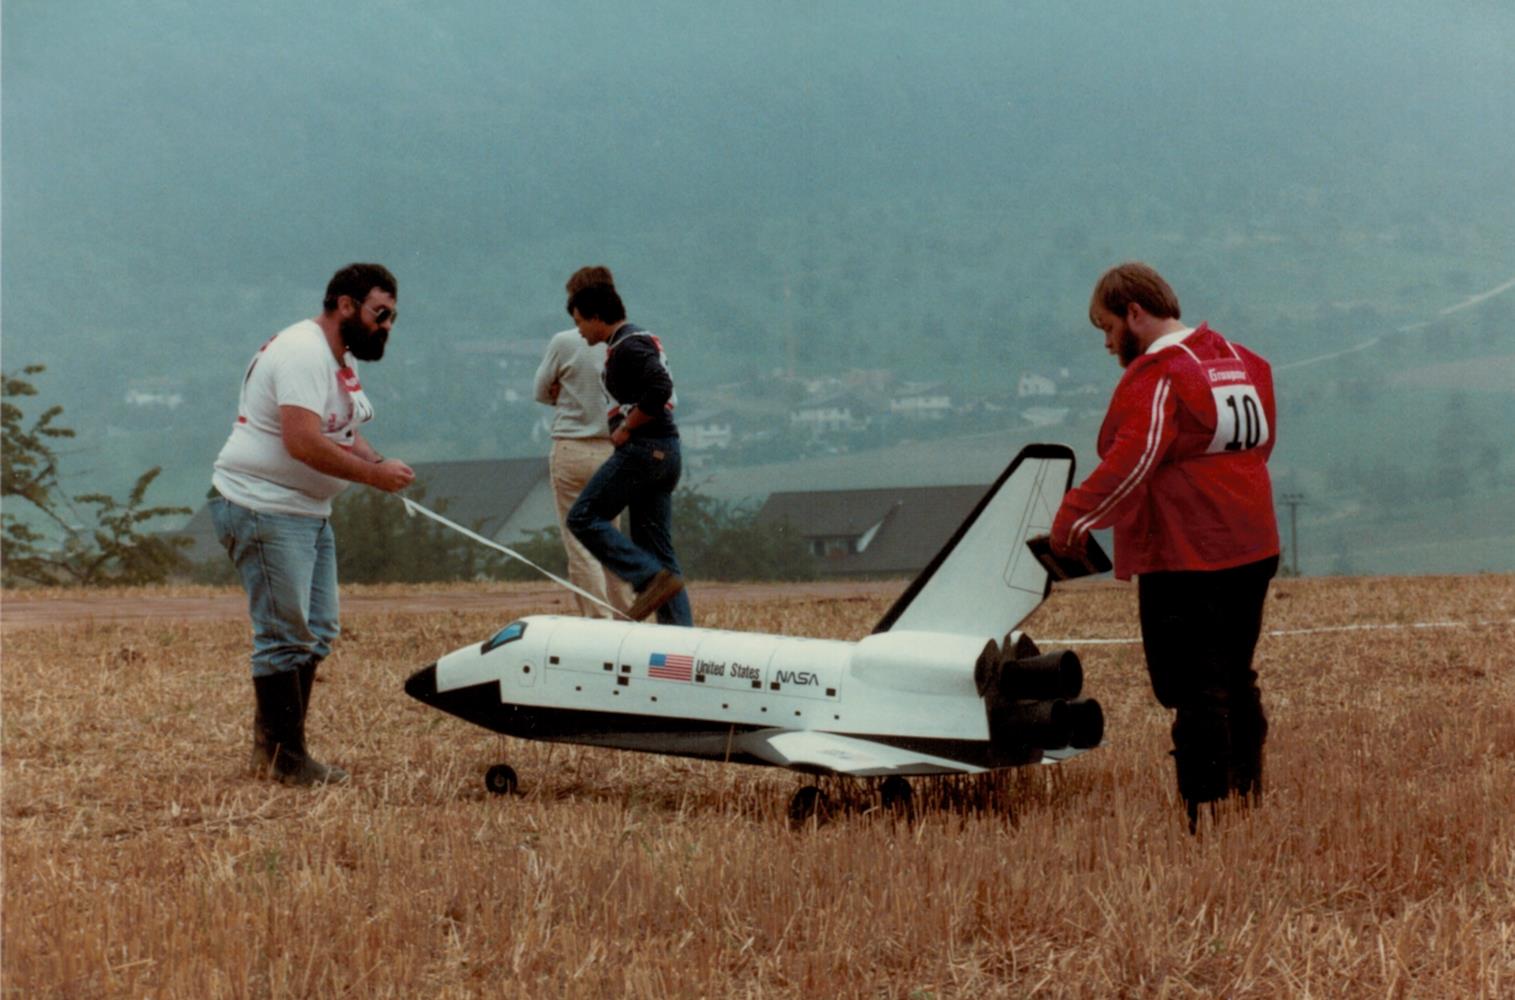 Rolf in 1985 am Flugtag Büren als Pilot des legendären Space Shuttle aus Styropor